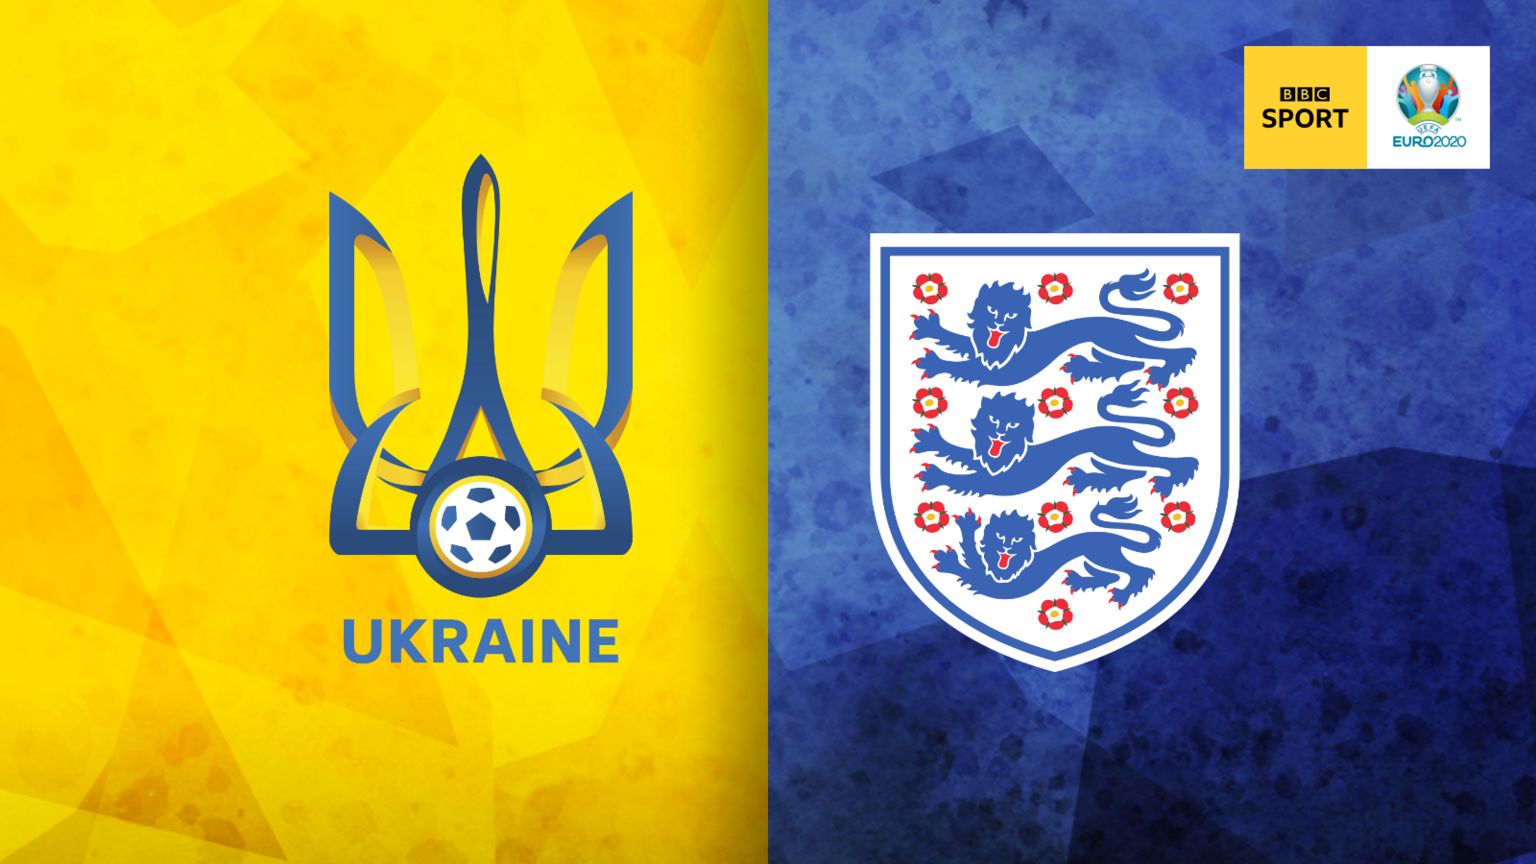 Ukraine v England